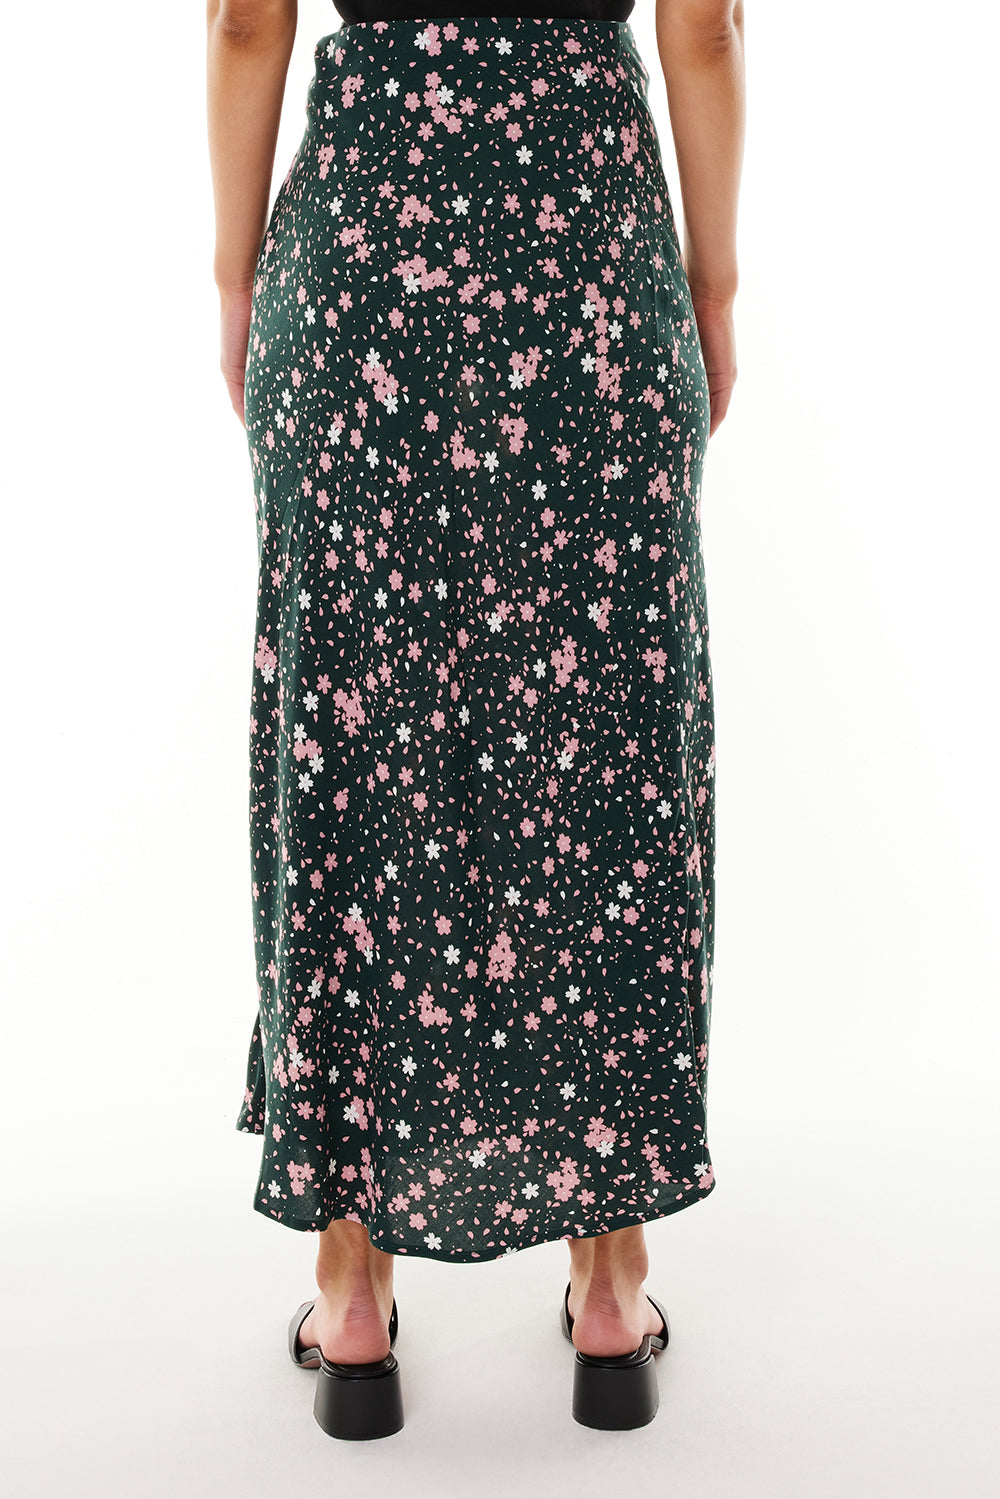 HUFFER // Venice Floral Lila Midi Skirt GREEN